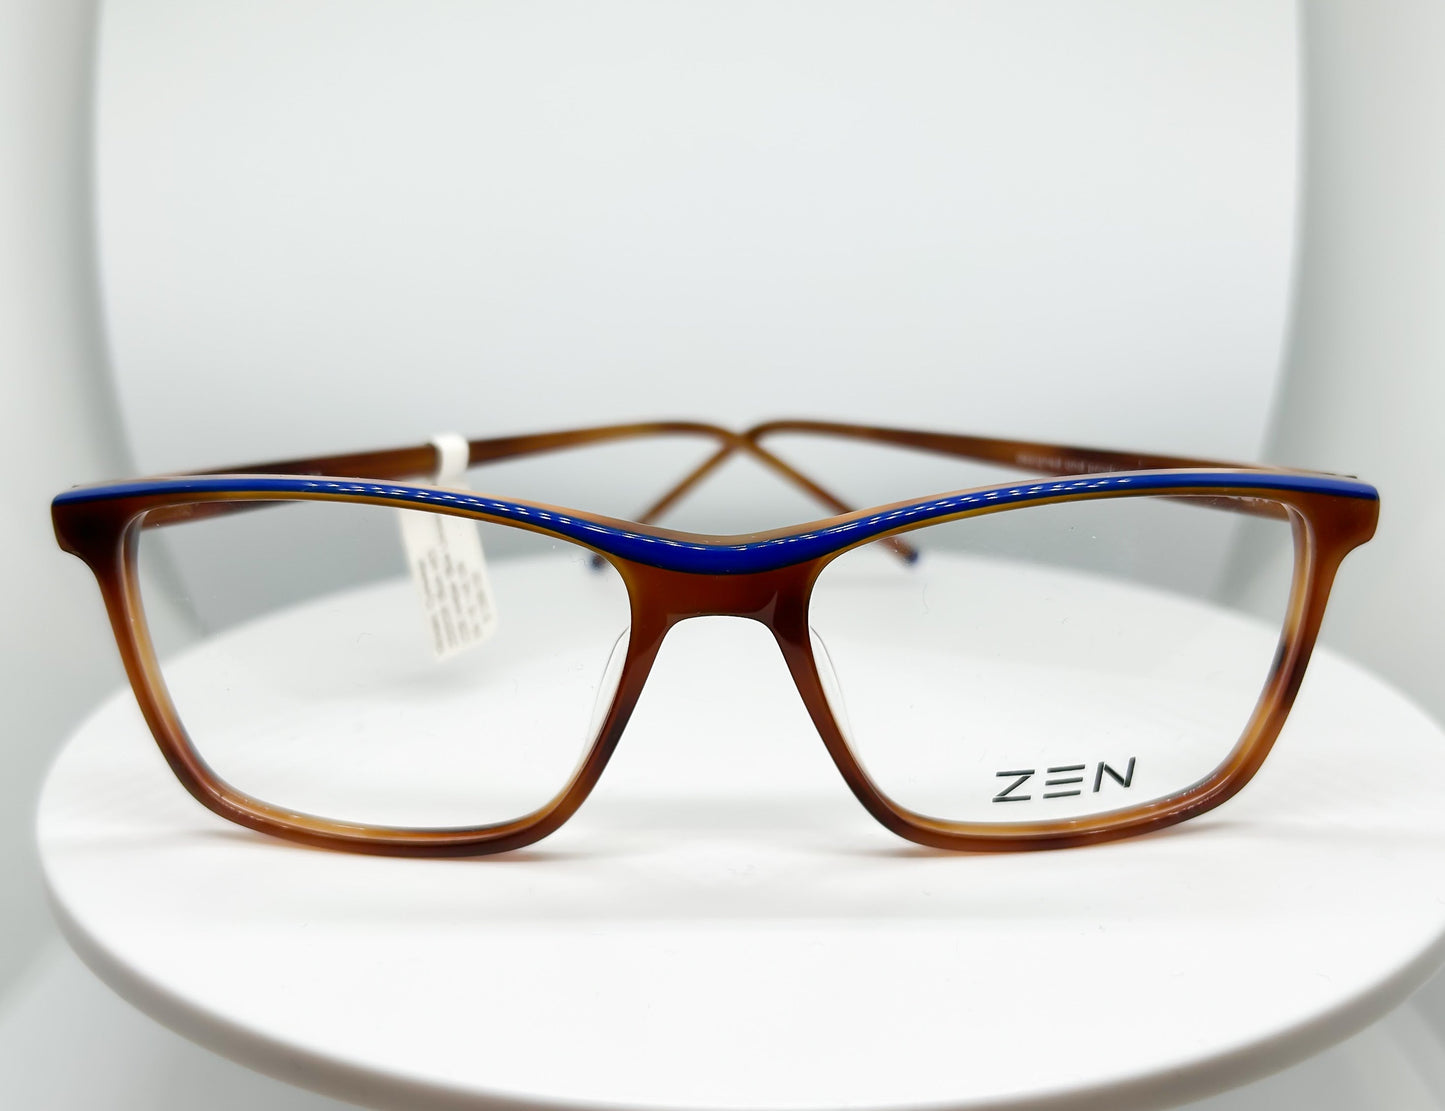 Zen-Eyewear